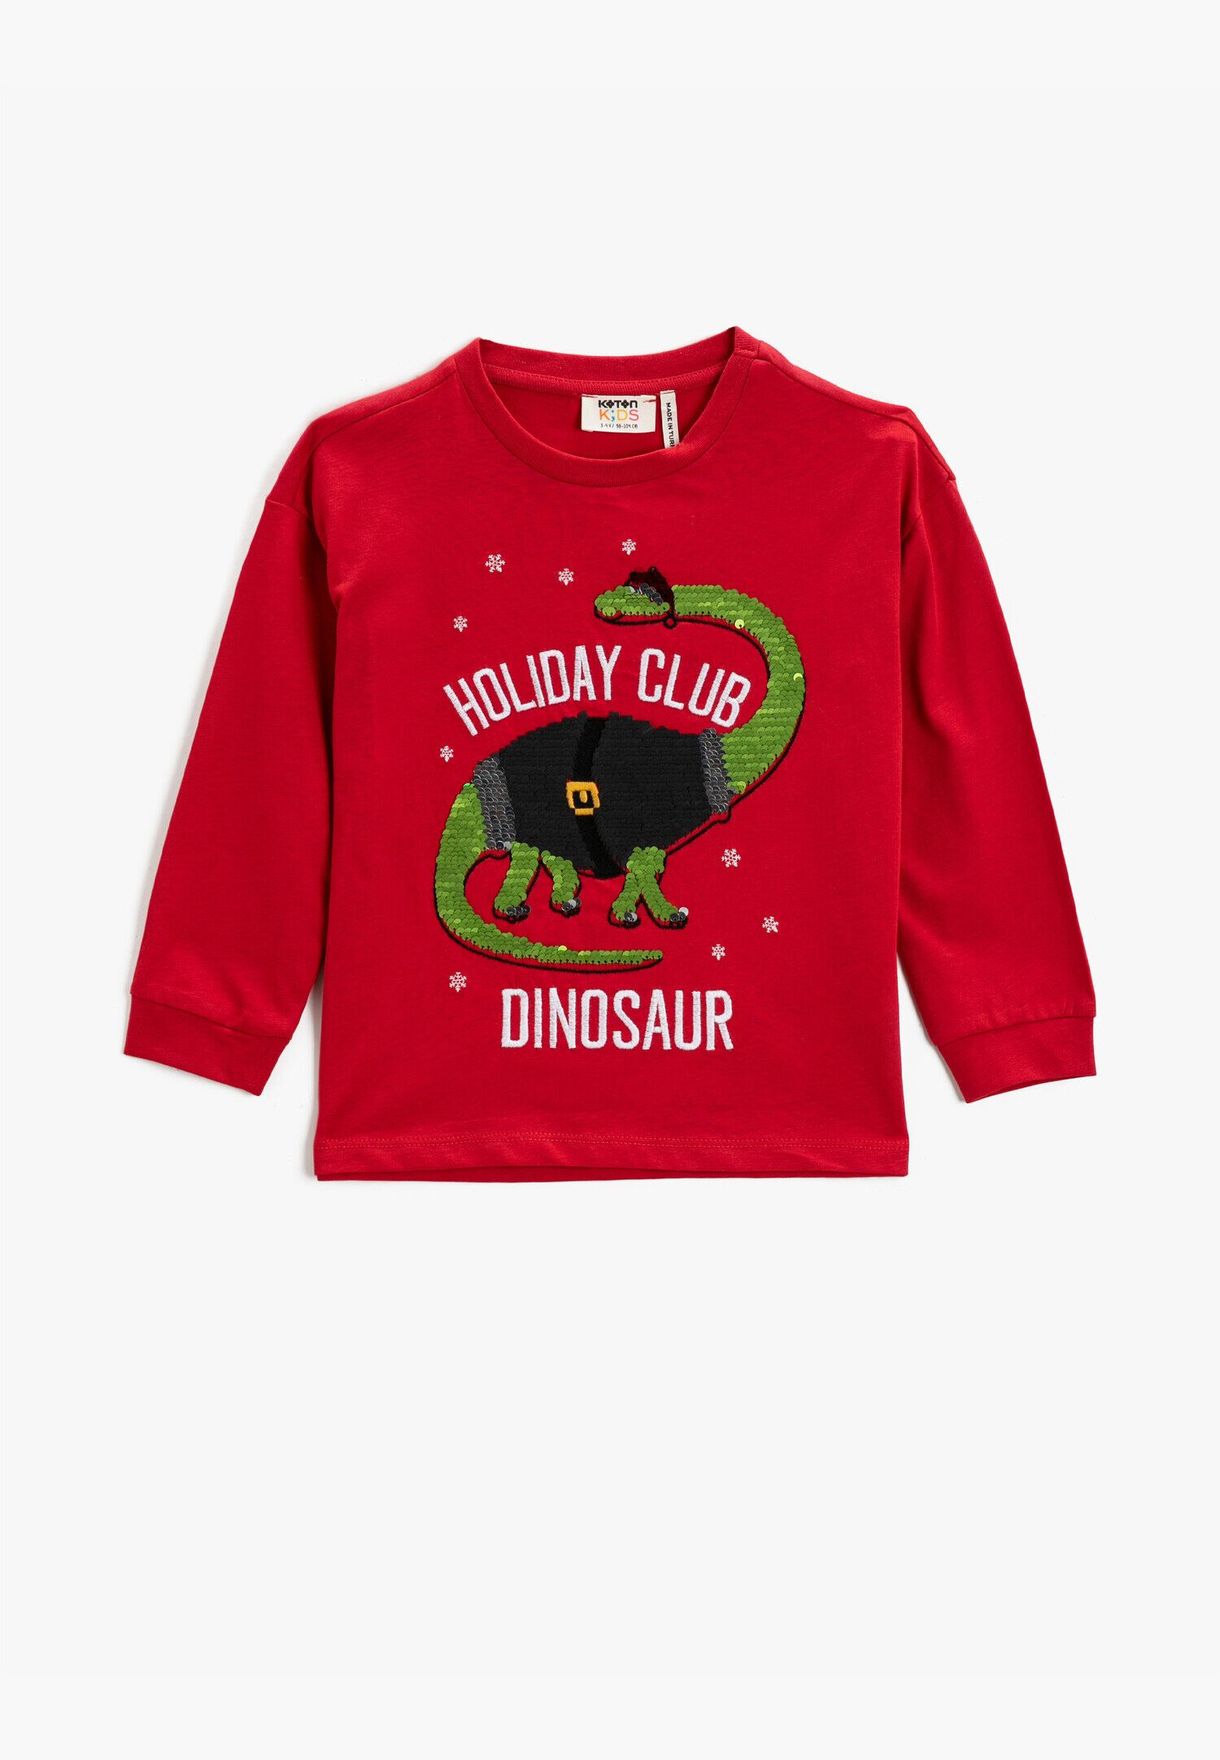 Dinosaur Printed Sequinned T-Shirt Cotton